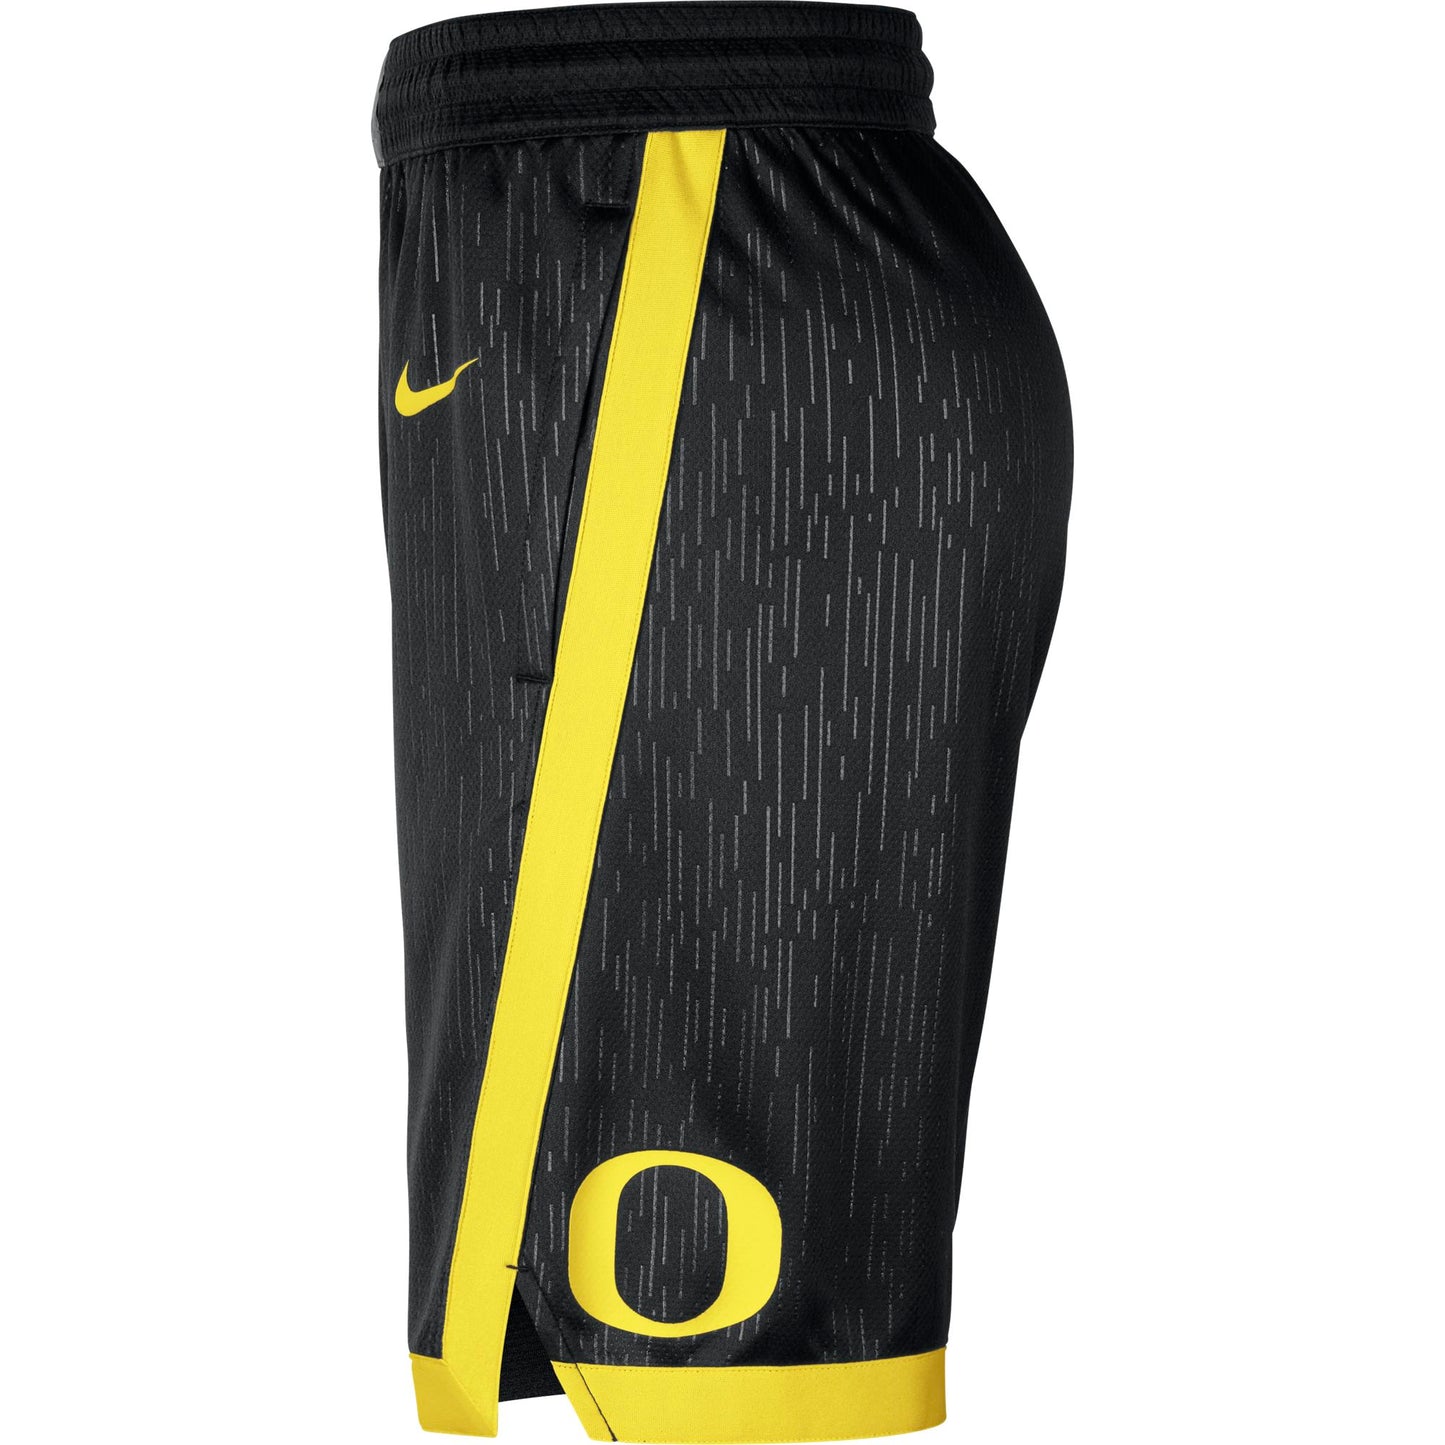 Men's Oregon Ducks Nike Replica Team Basketball Shorts - Black